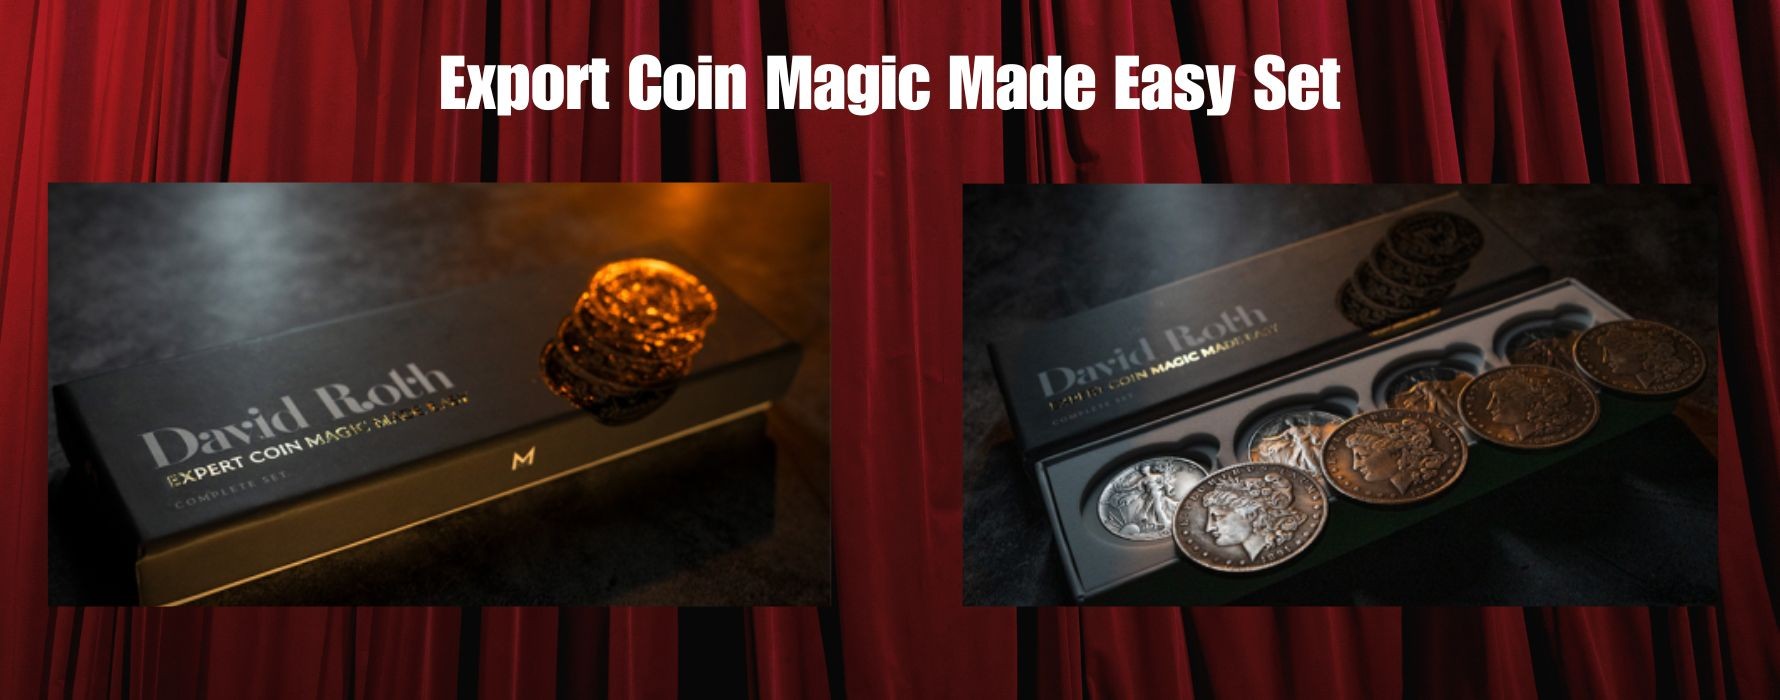 Coin magic set